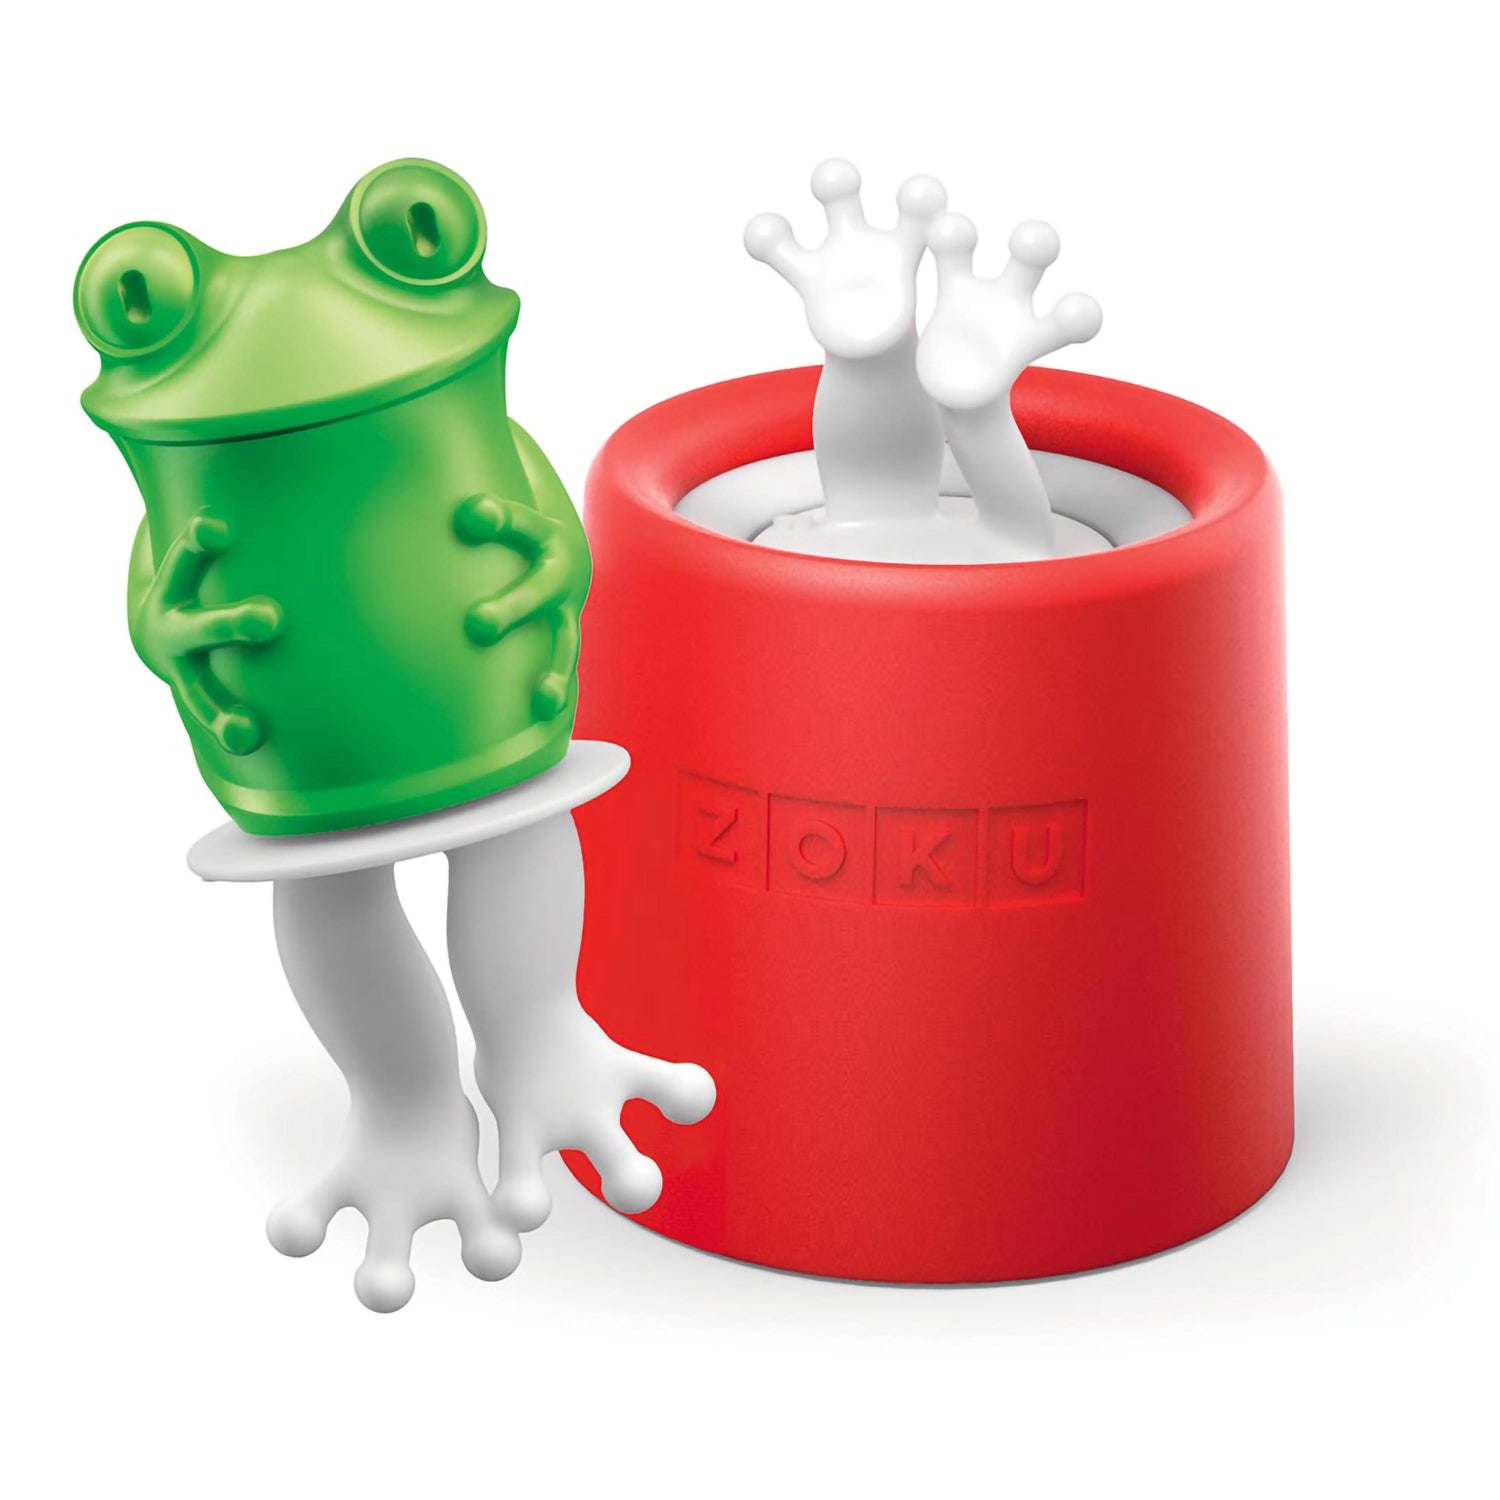 Stampo per ghiacciolo Frog zoku ZK CH PM04 Kunzi Shop 1